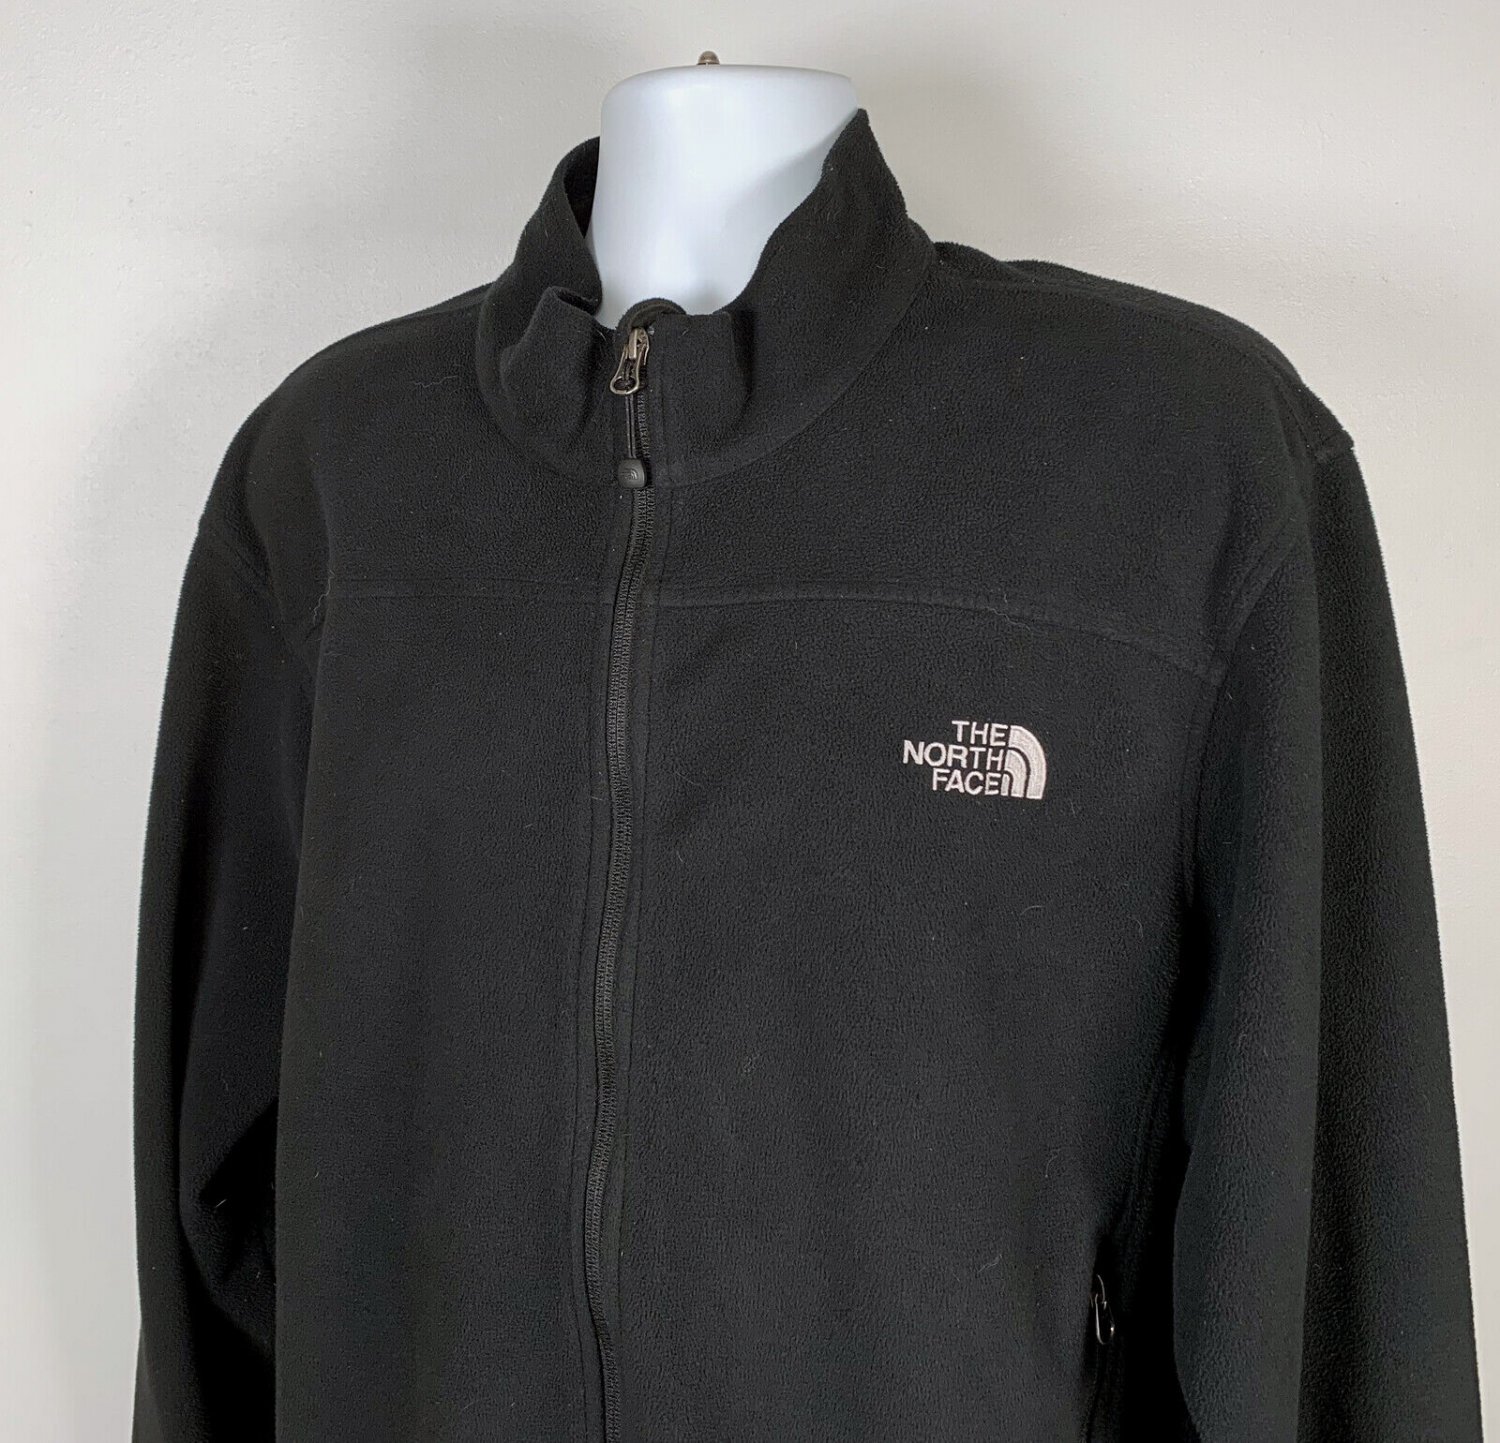 The North Face Windwall Soft Shell Fleece Jacket Black Mens Size XL